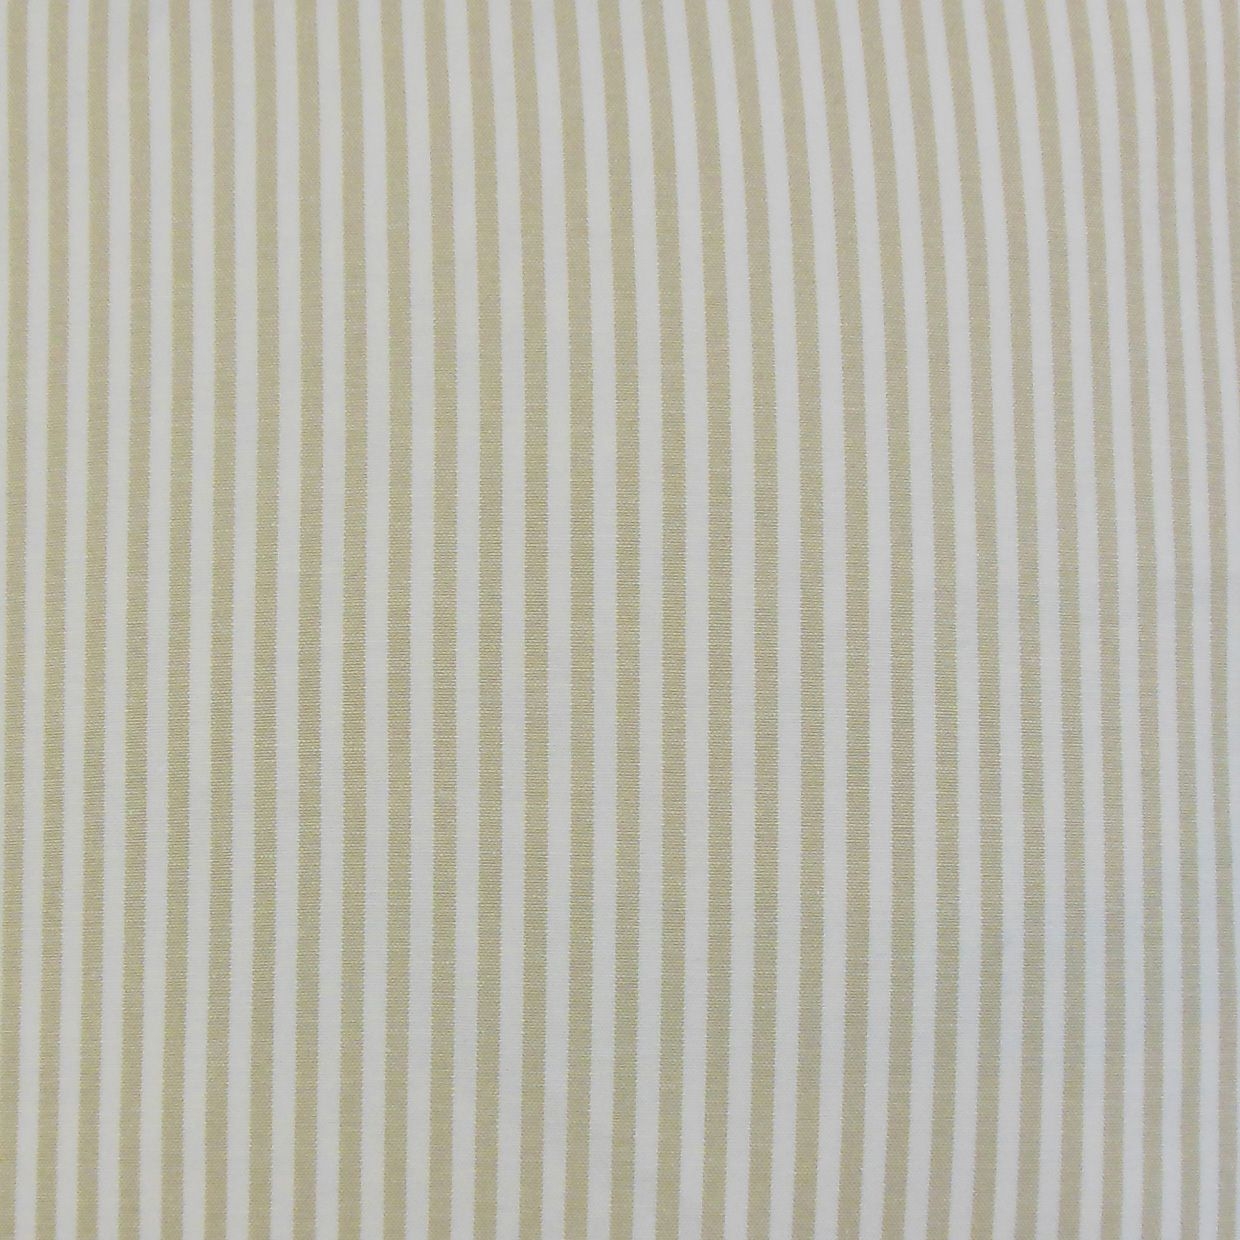 Classic Stripe Pillow, Beige, 18" x 18" - Image 1